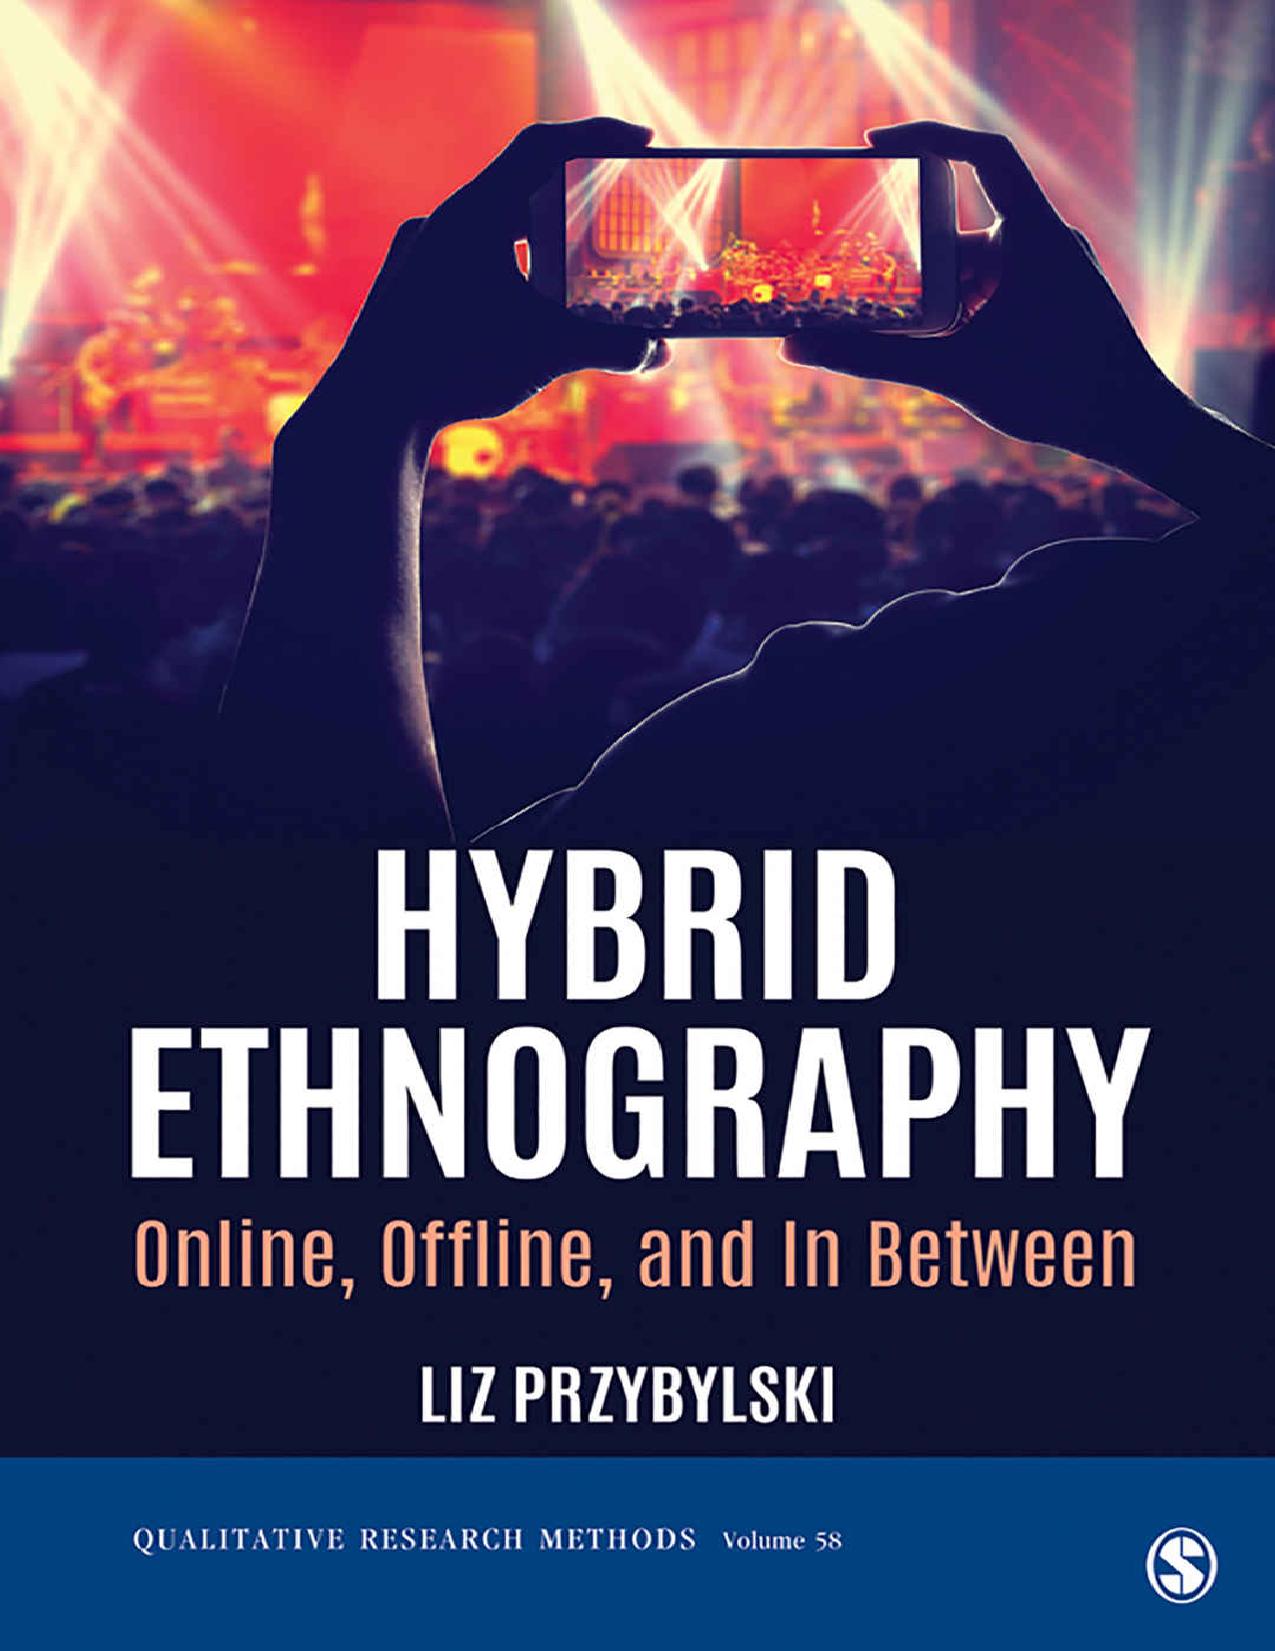 (eBook PDF) Hybrid Ethnography: Online, Offline, and In Between by Liz Przybylski